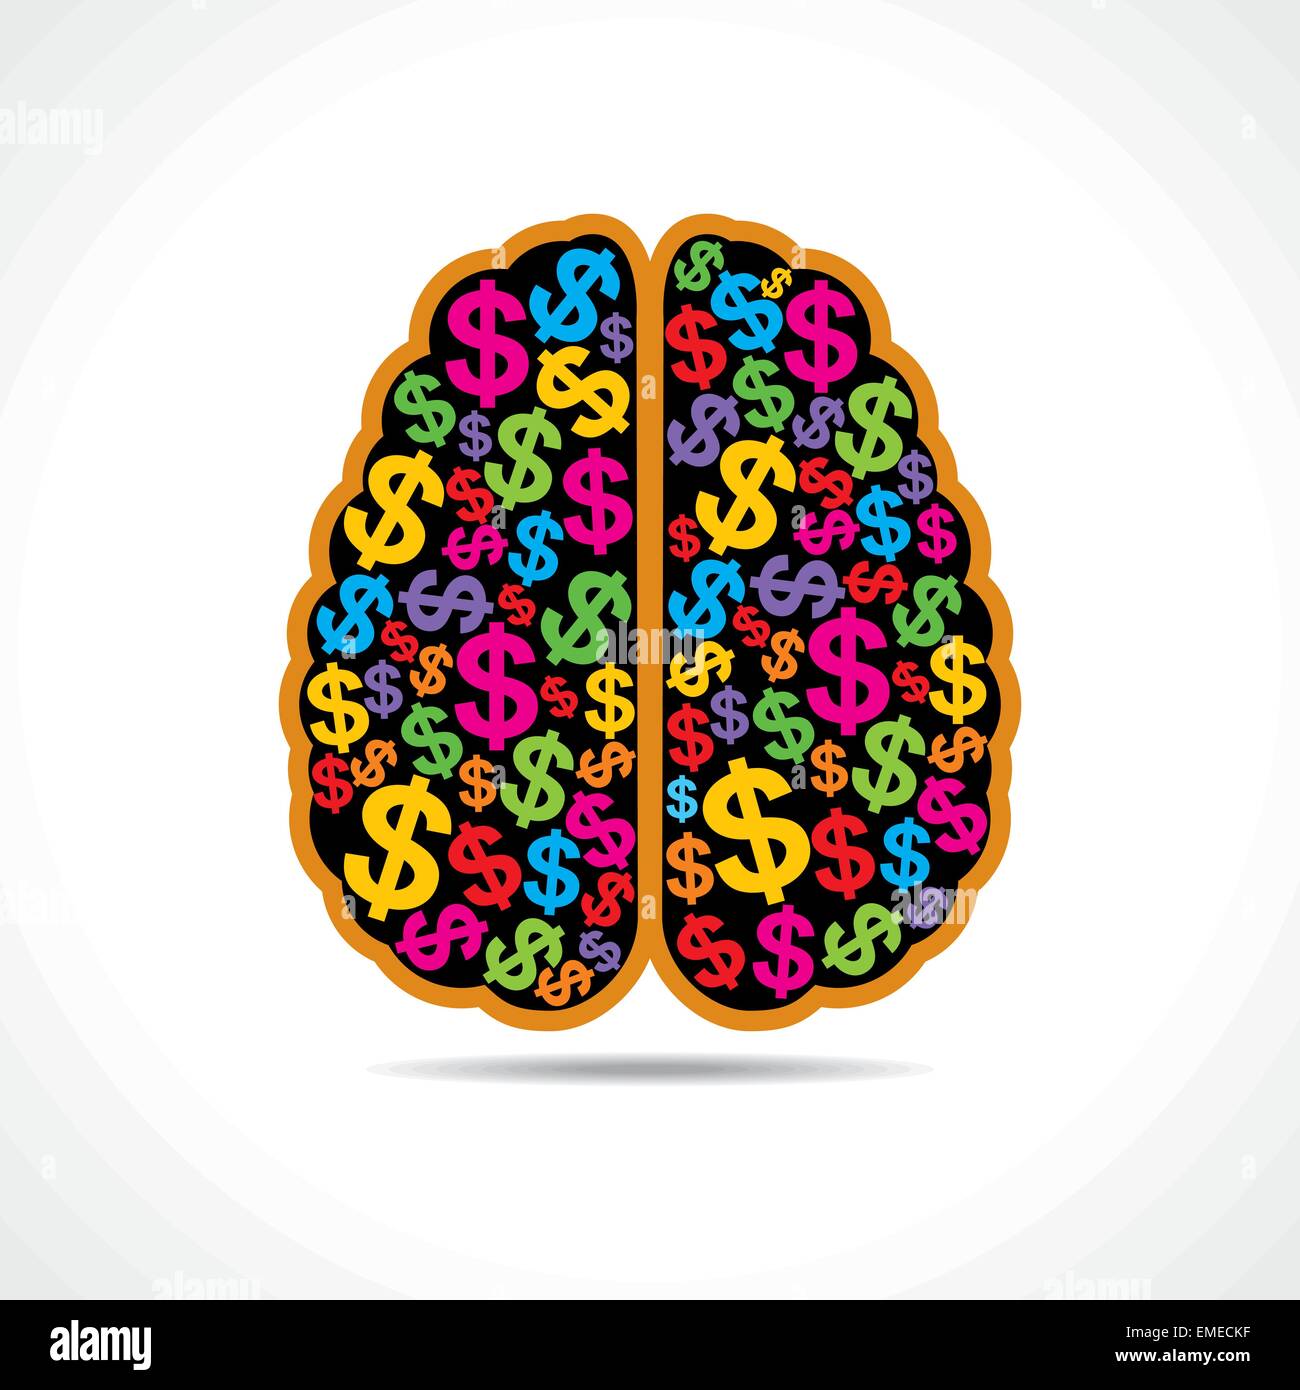 Conceptual idea  silhouette image of brain with dollar symbol Stock Vector